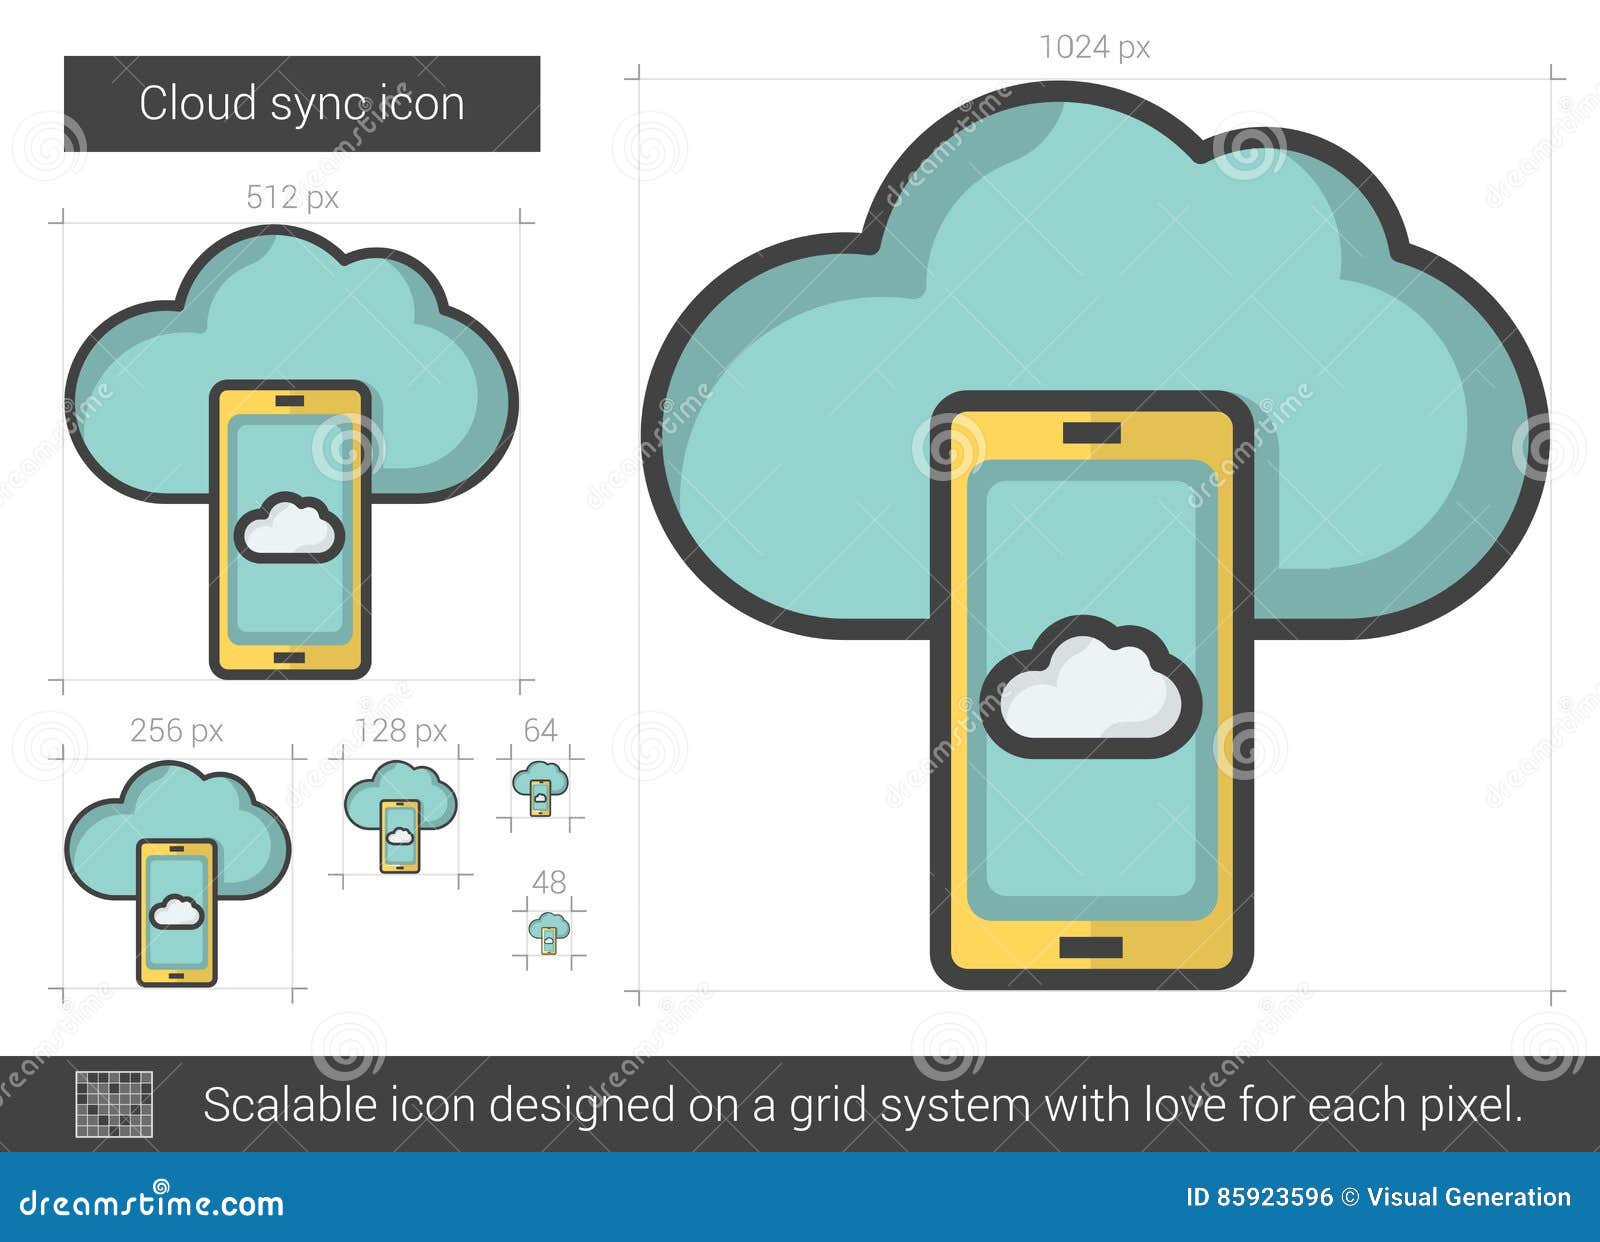 Облако телефон реалми. Cloud sync. Cloud sync icon.